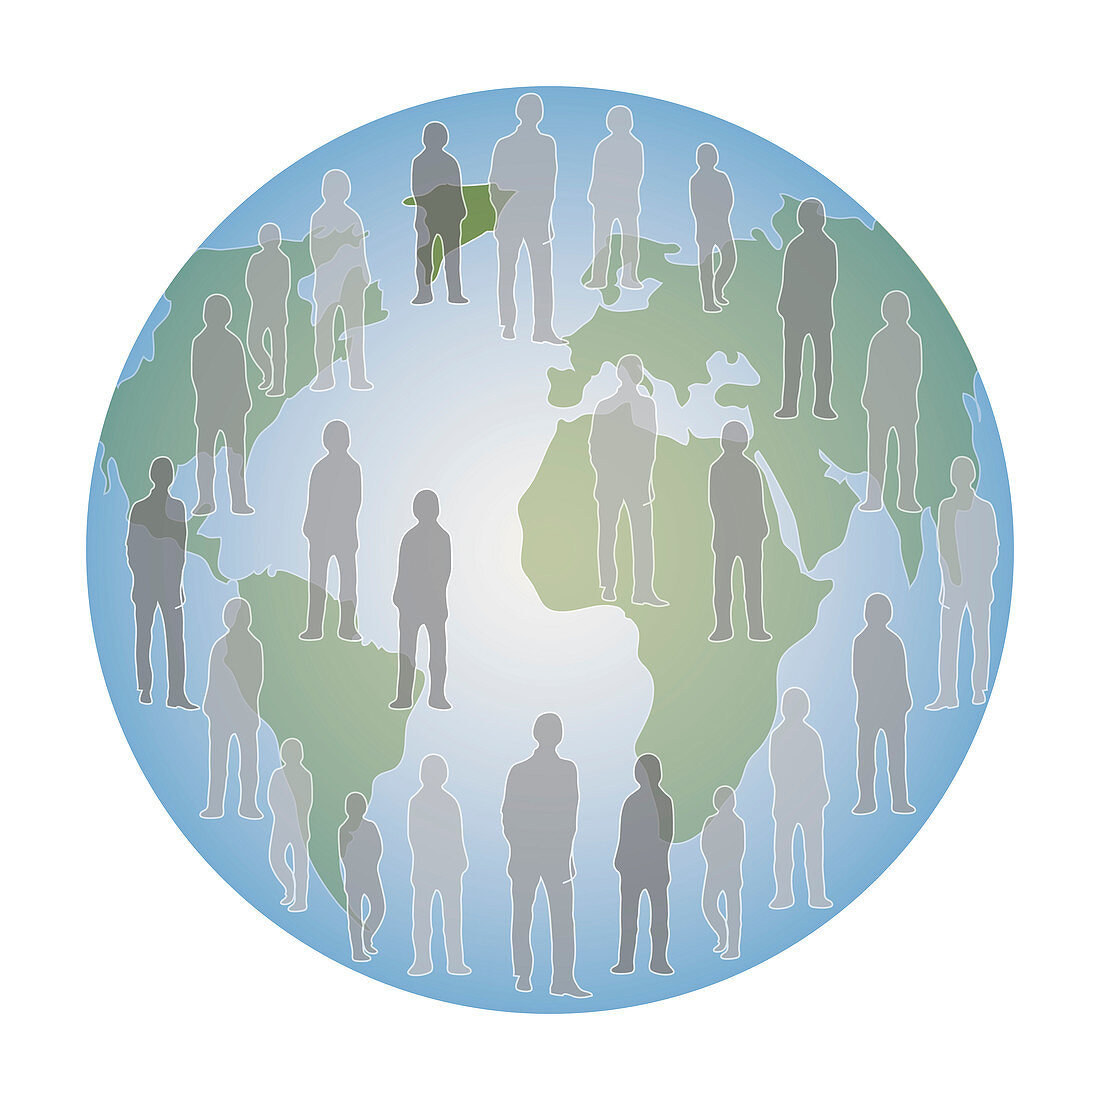 Global population, conceptual illustration